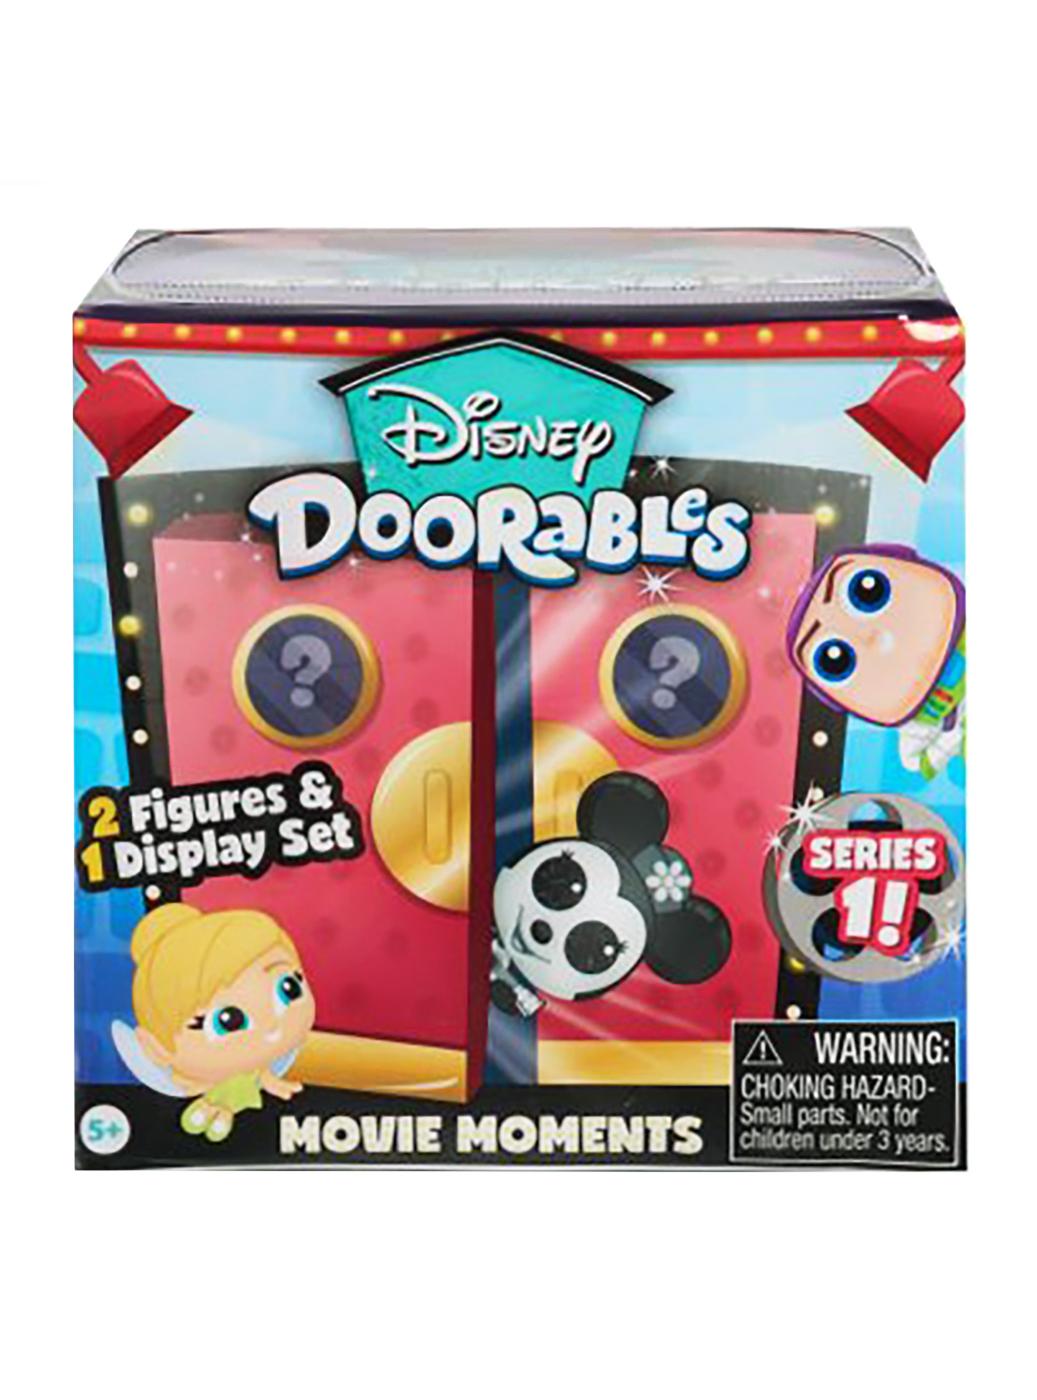 Disney Doorables Mini Peek Figure Set, Series 10 - Shop Action